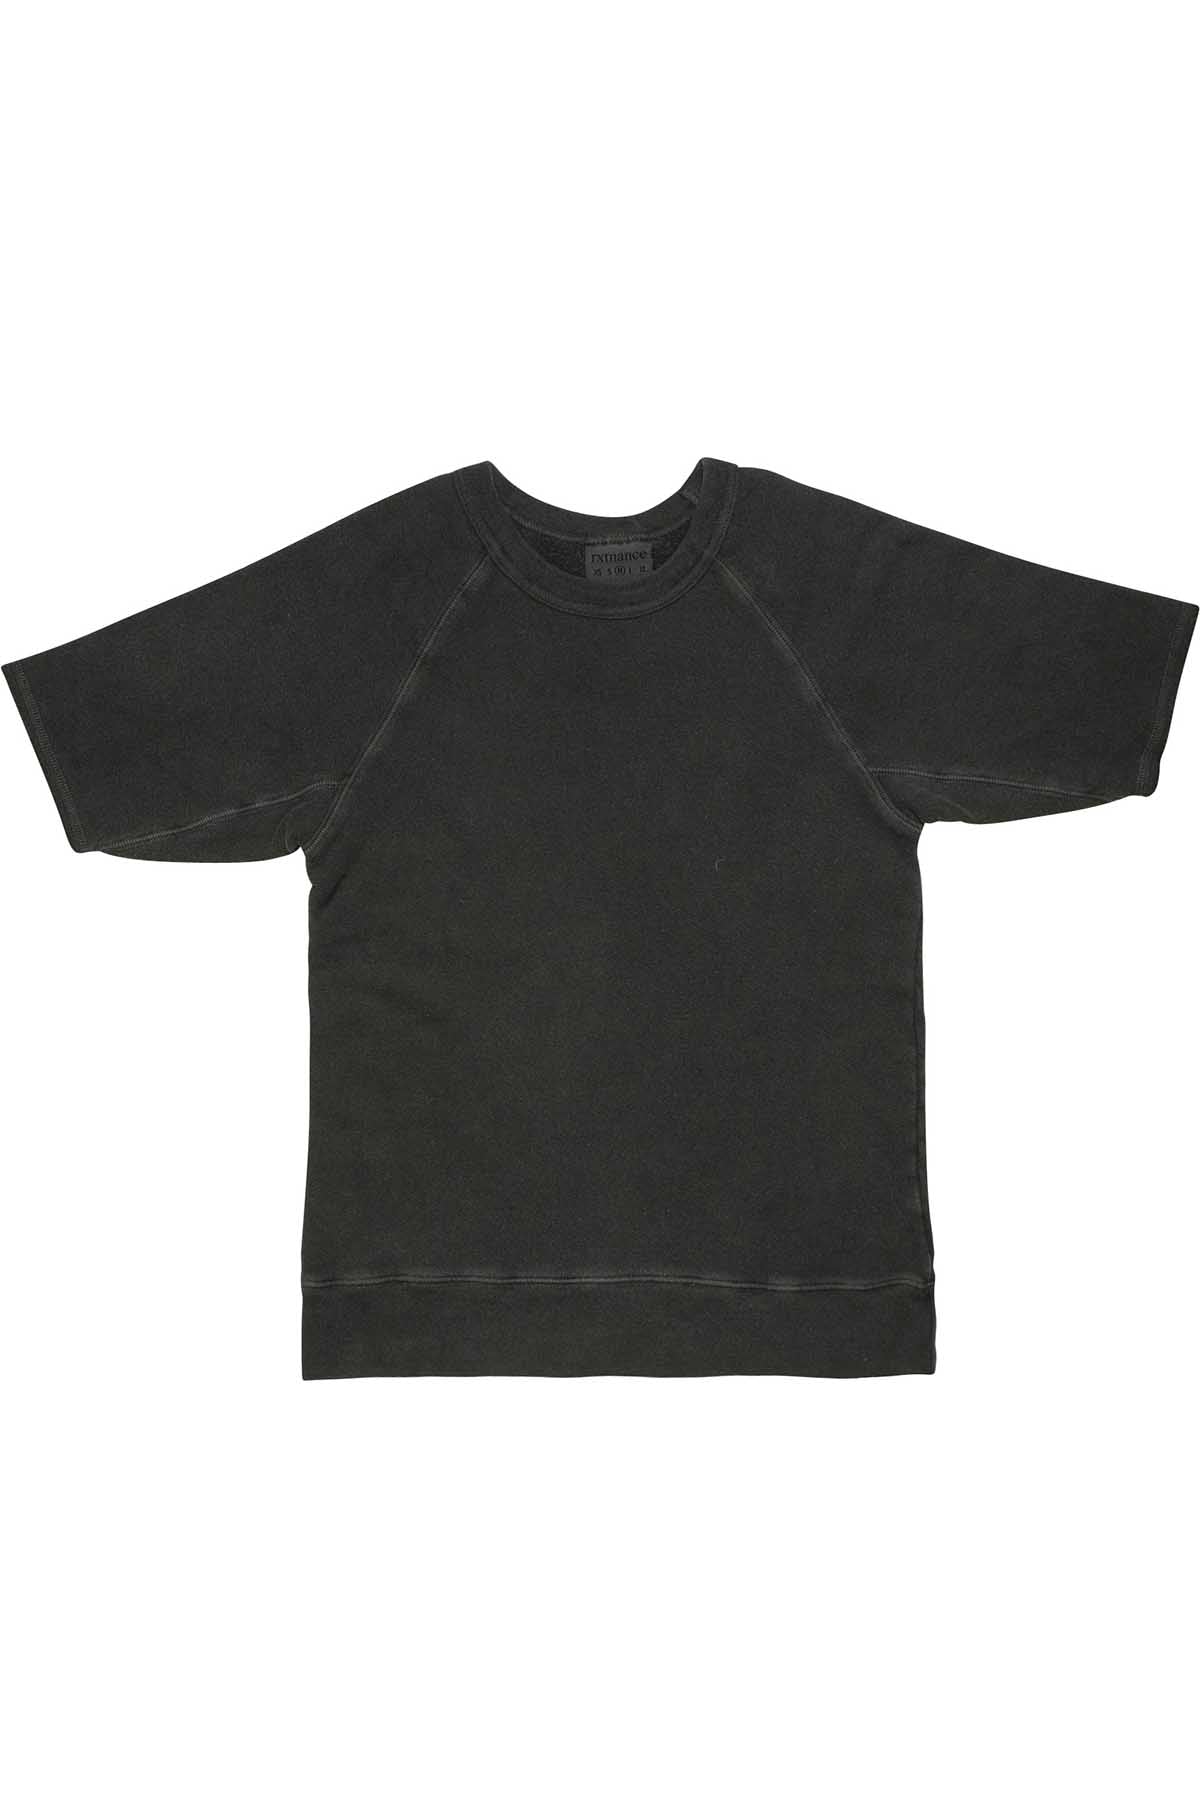 Rxmance Unisex Vintage Black Short Sleeve Sweatshirt